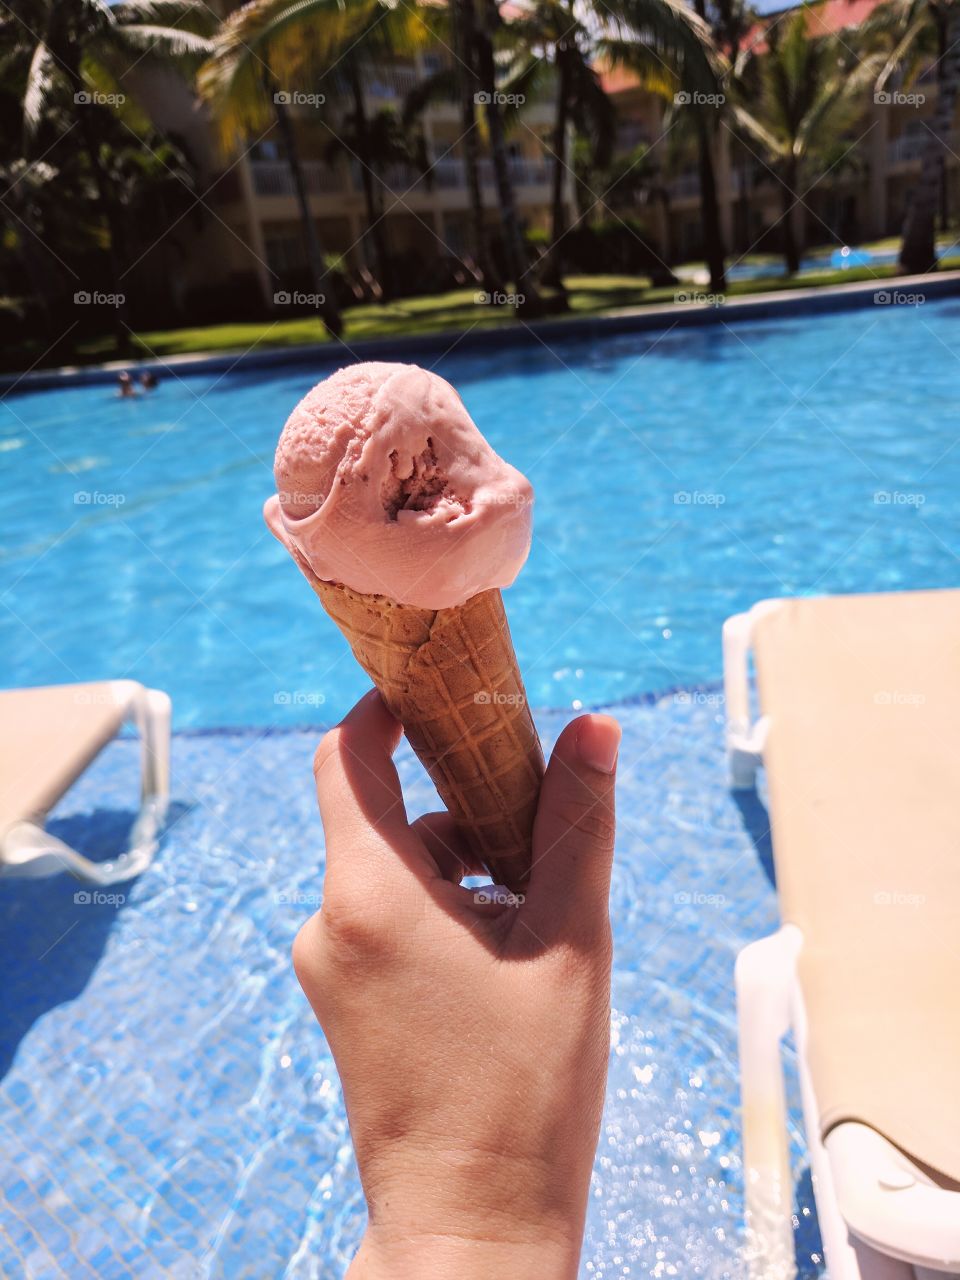 Ice cream near swimming pool